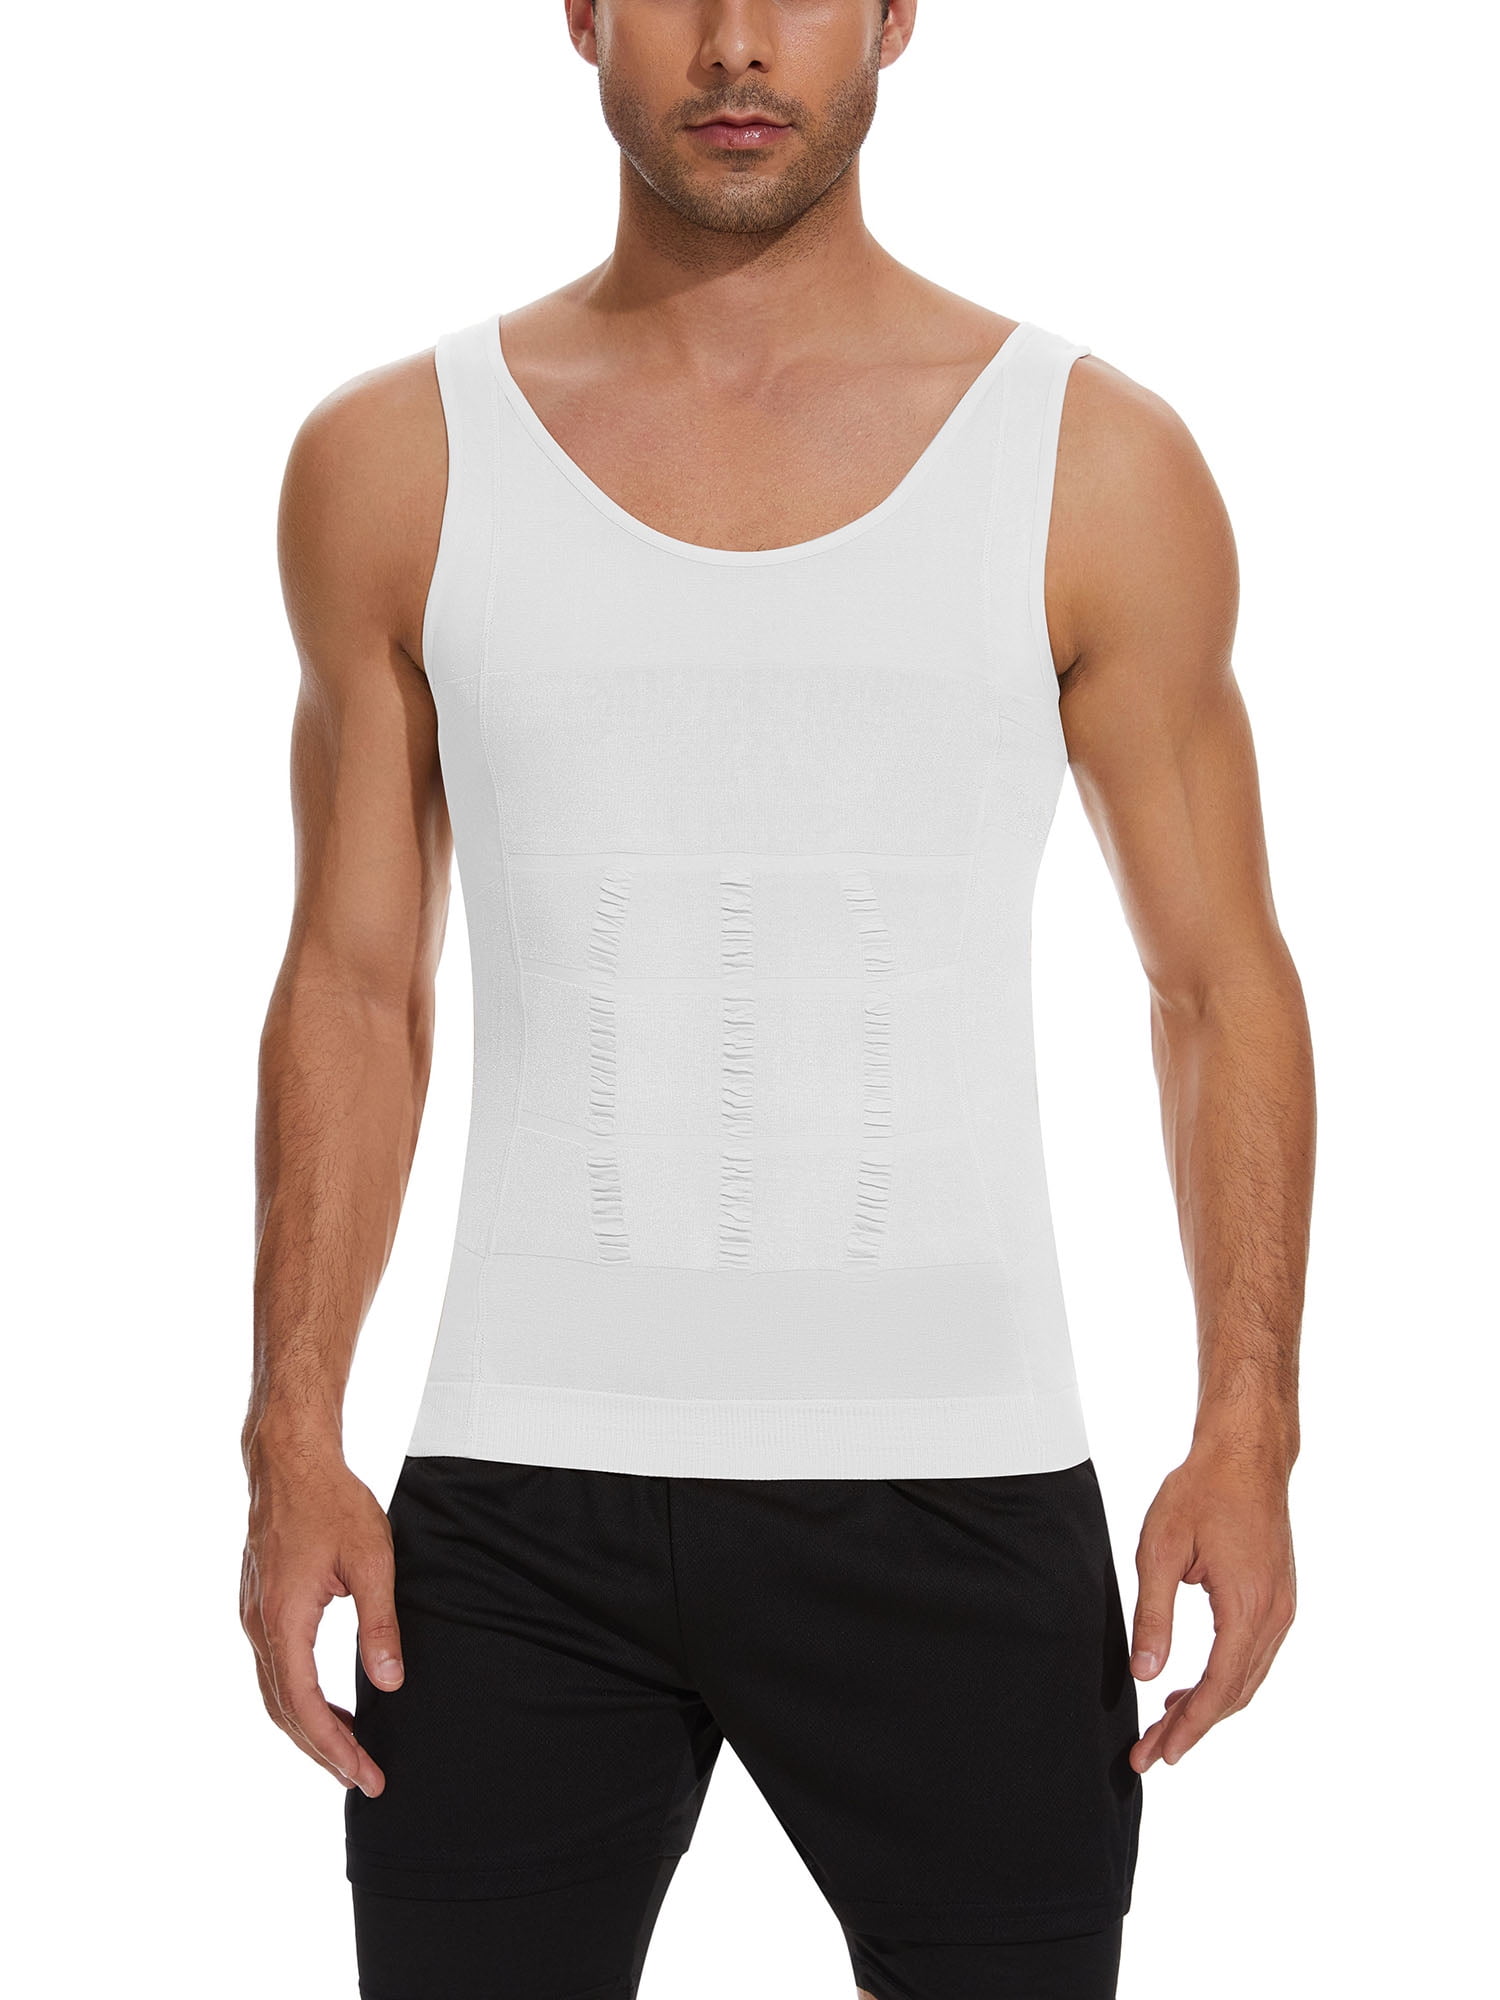 QRIC 2 Pack Mens Compression Shirts Shapewear Tank Top Slimming